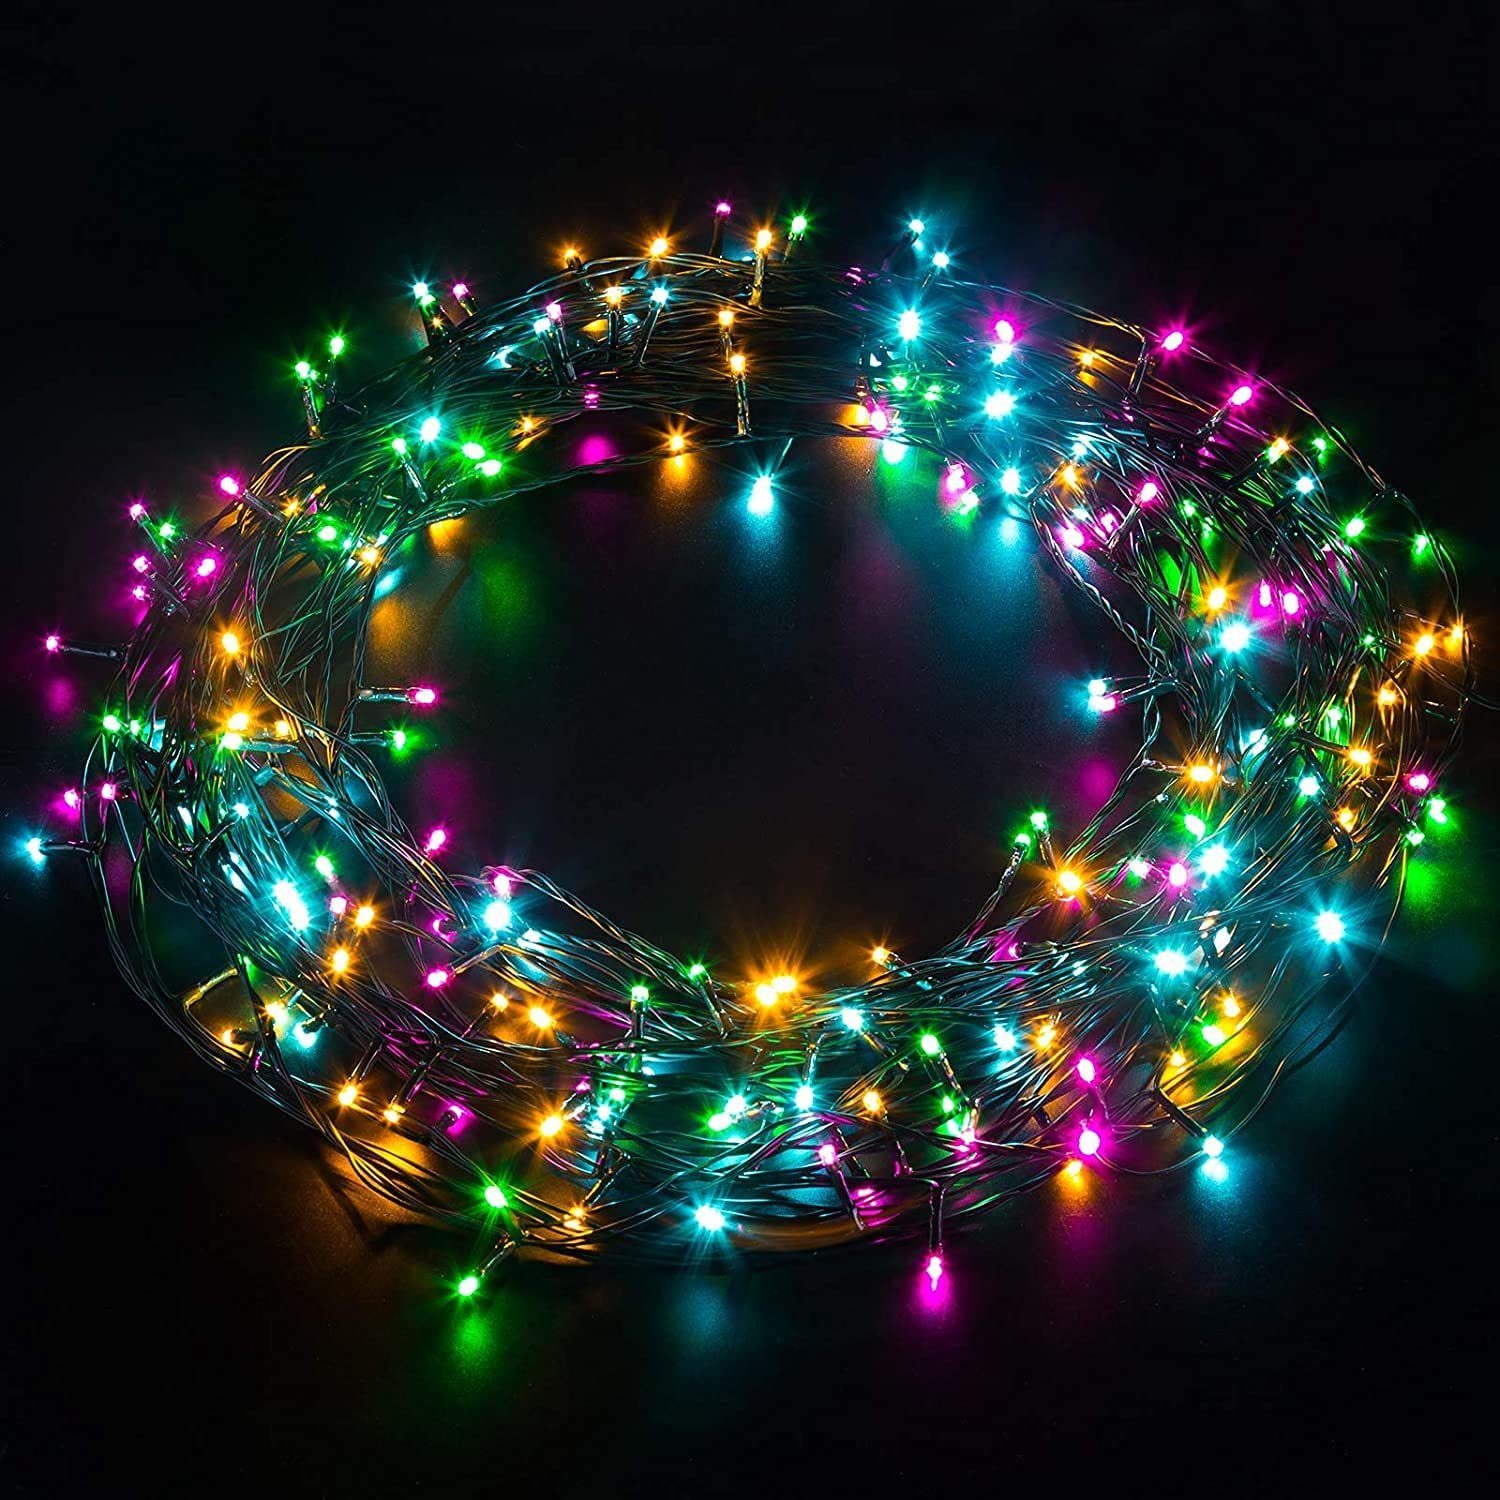 Elegear LED-Lichterkette »Bunt LED Lichterkette Außen 100M 1000 LEDs  Weihnachtsbeleuchtung«, 200-flammig, 20M 200LEDs Lichterkette für  Weihnachten